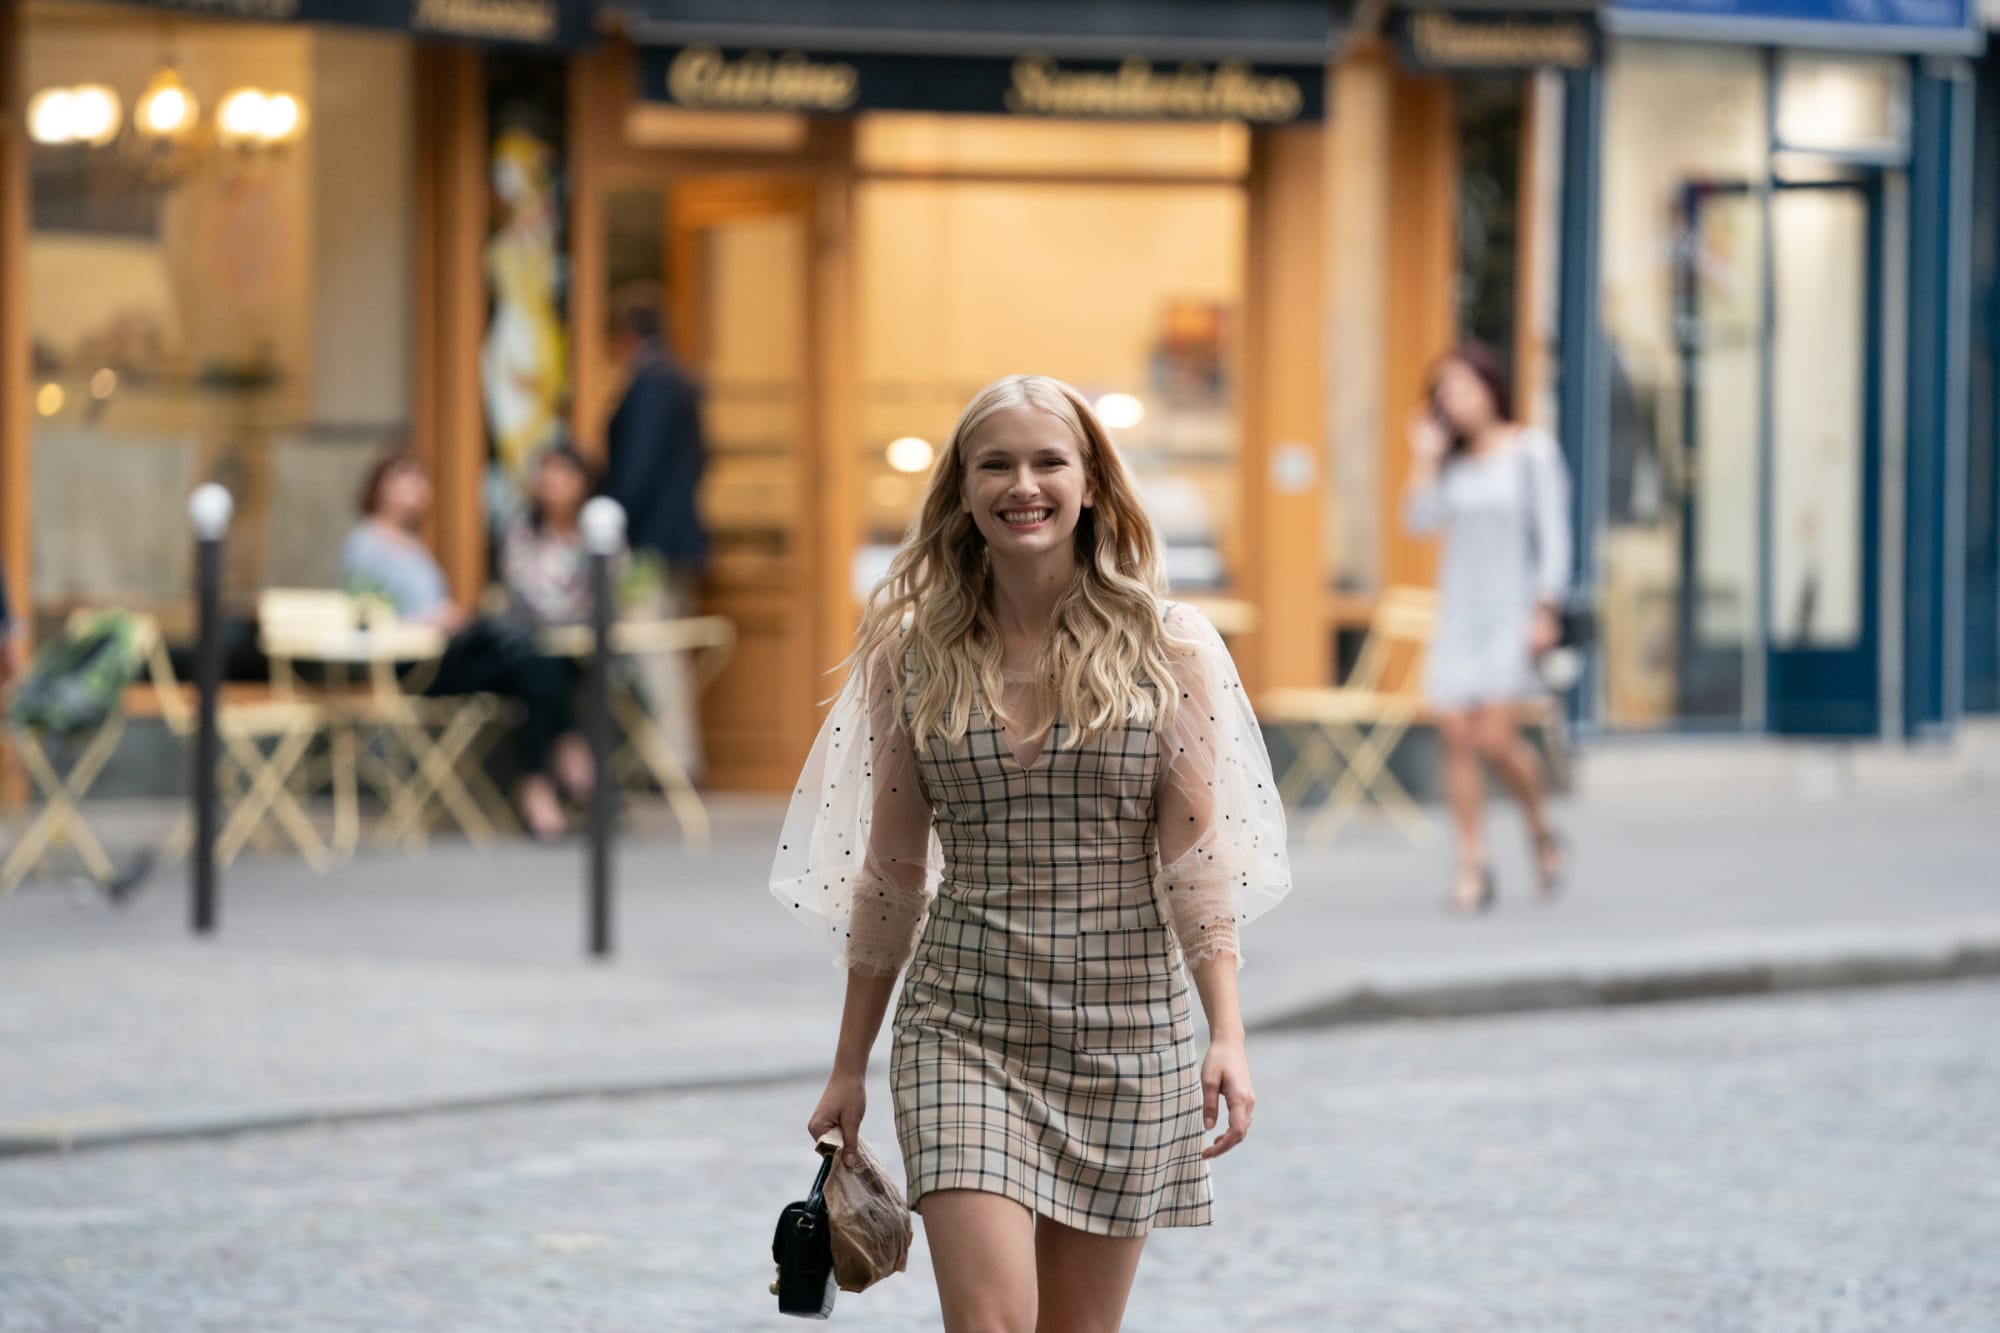 Emily in Paris Episode 5 recap Emily's social media status opens doors